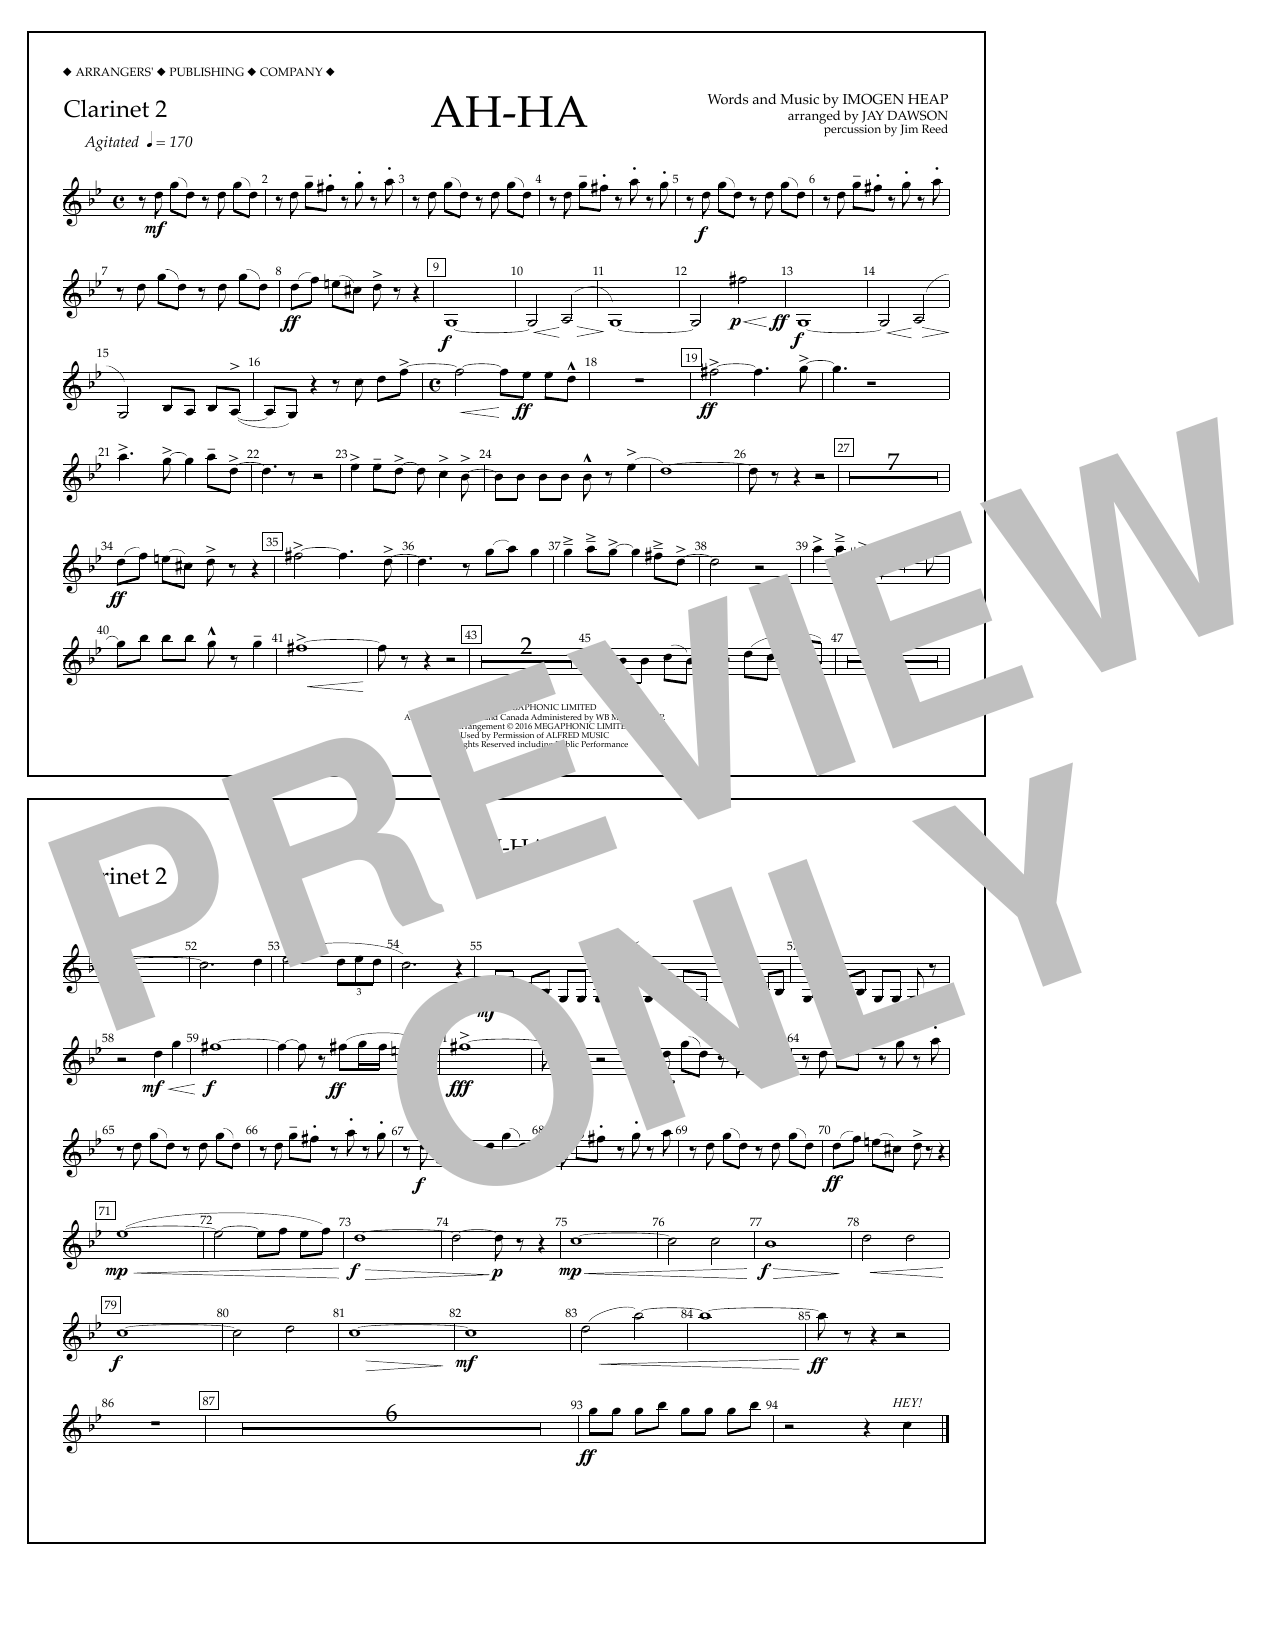 Download Jay Dawson Ah-ha - Clarinet 2 Sheet Music